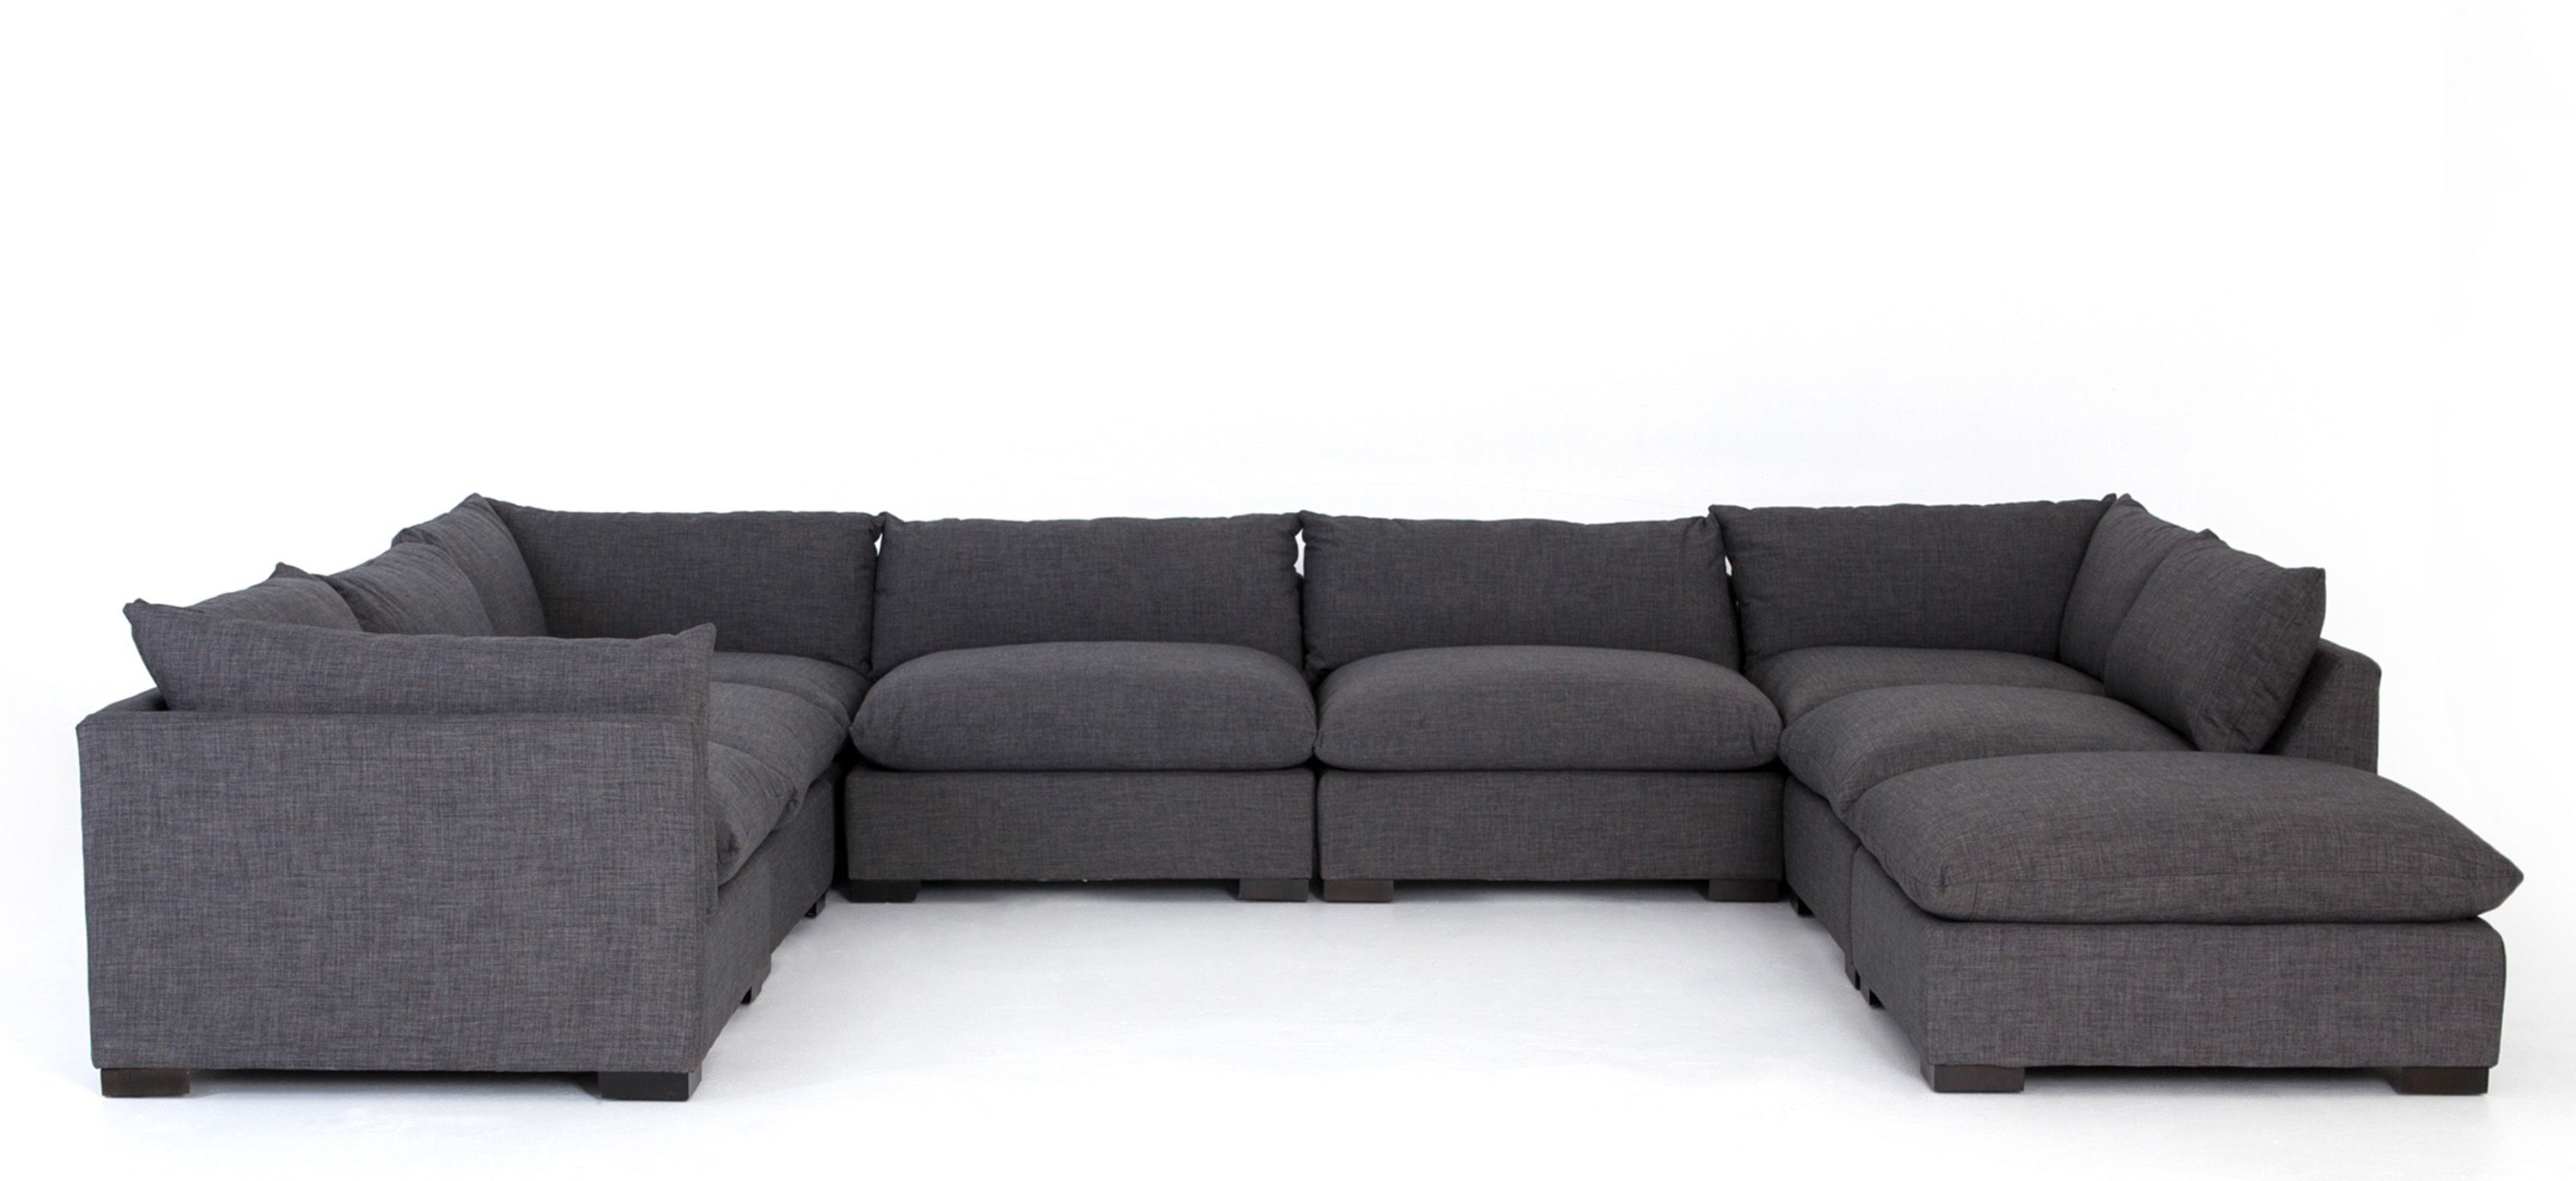 Westwood 8-pc. Modular Sectional Sofa w/ Ottoman